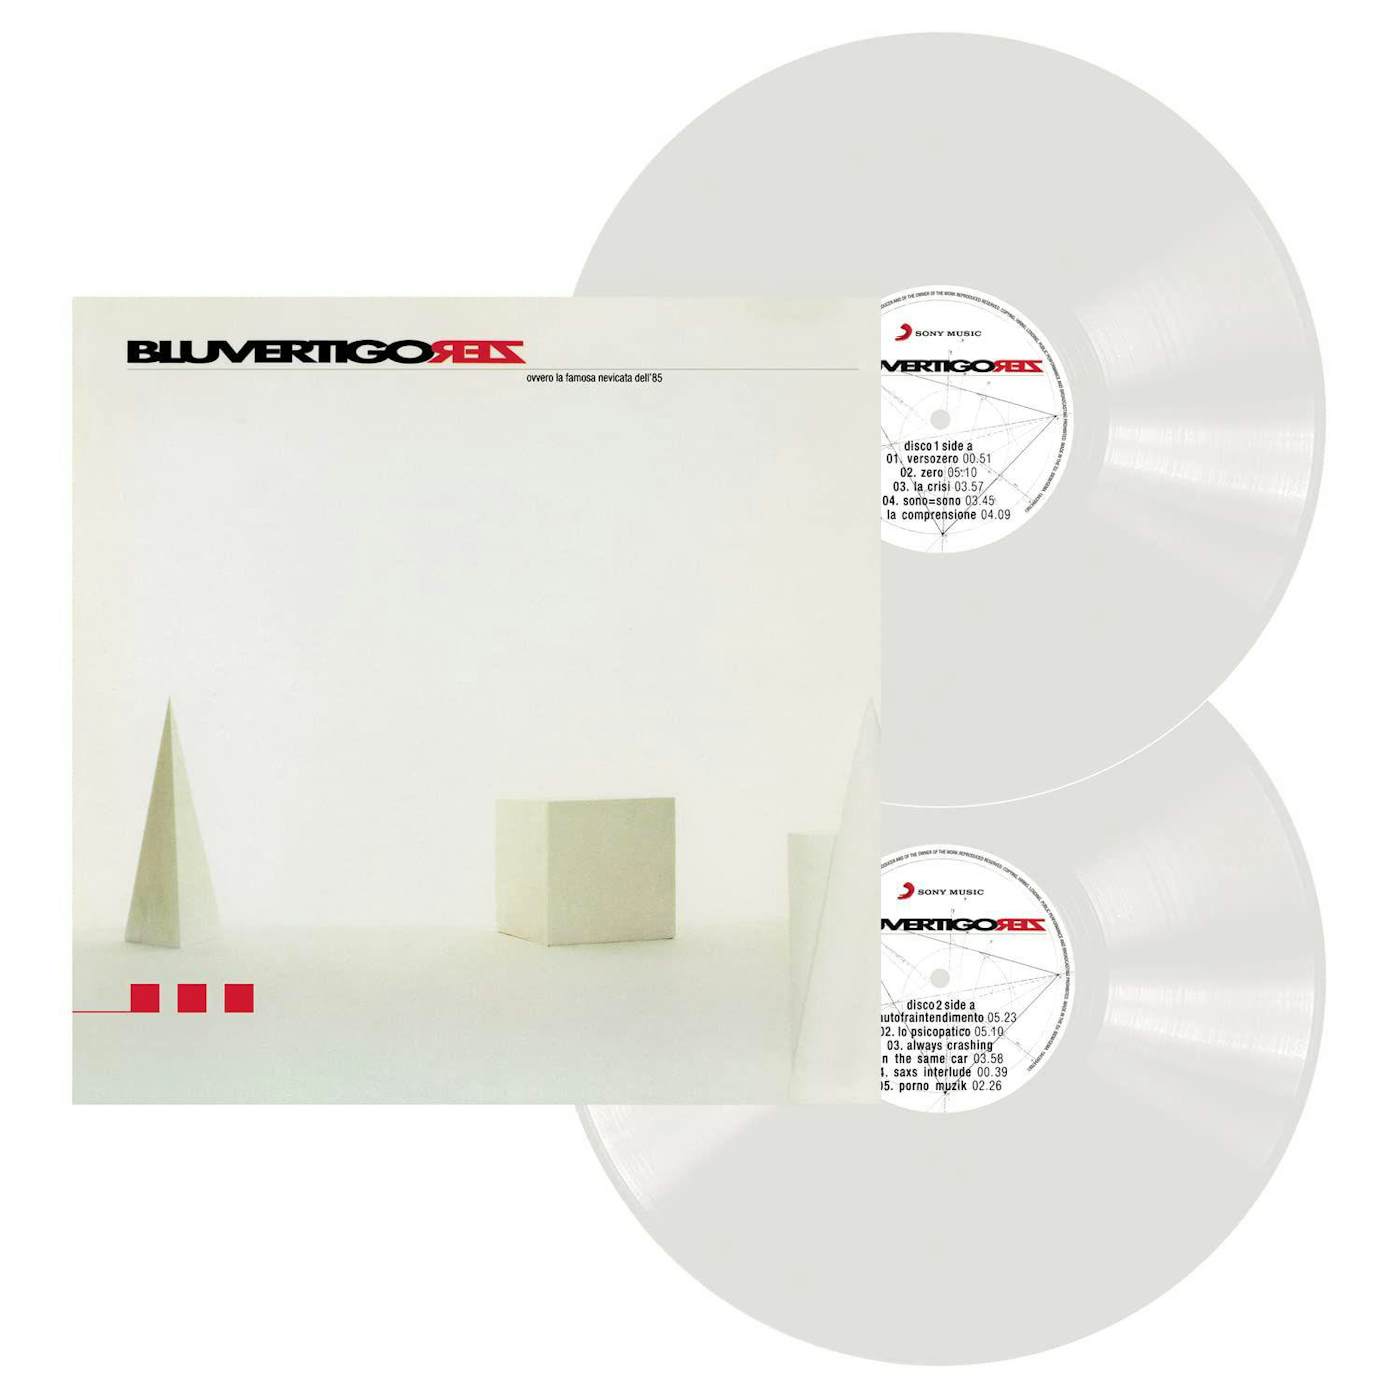 Bluvertigo Zero Vinyl Record